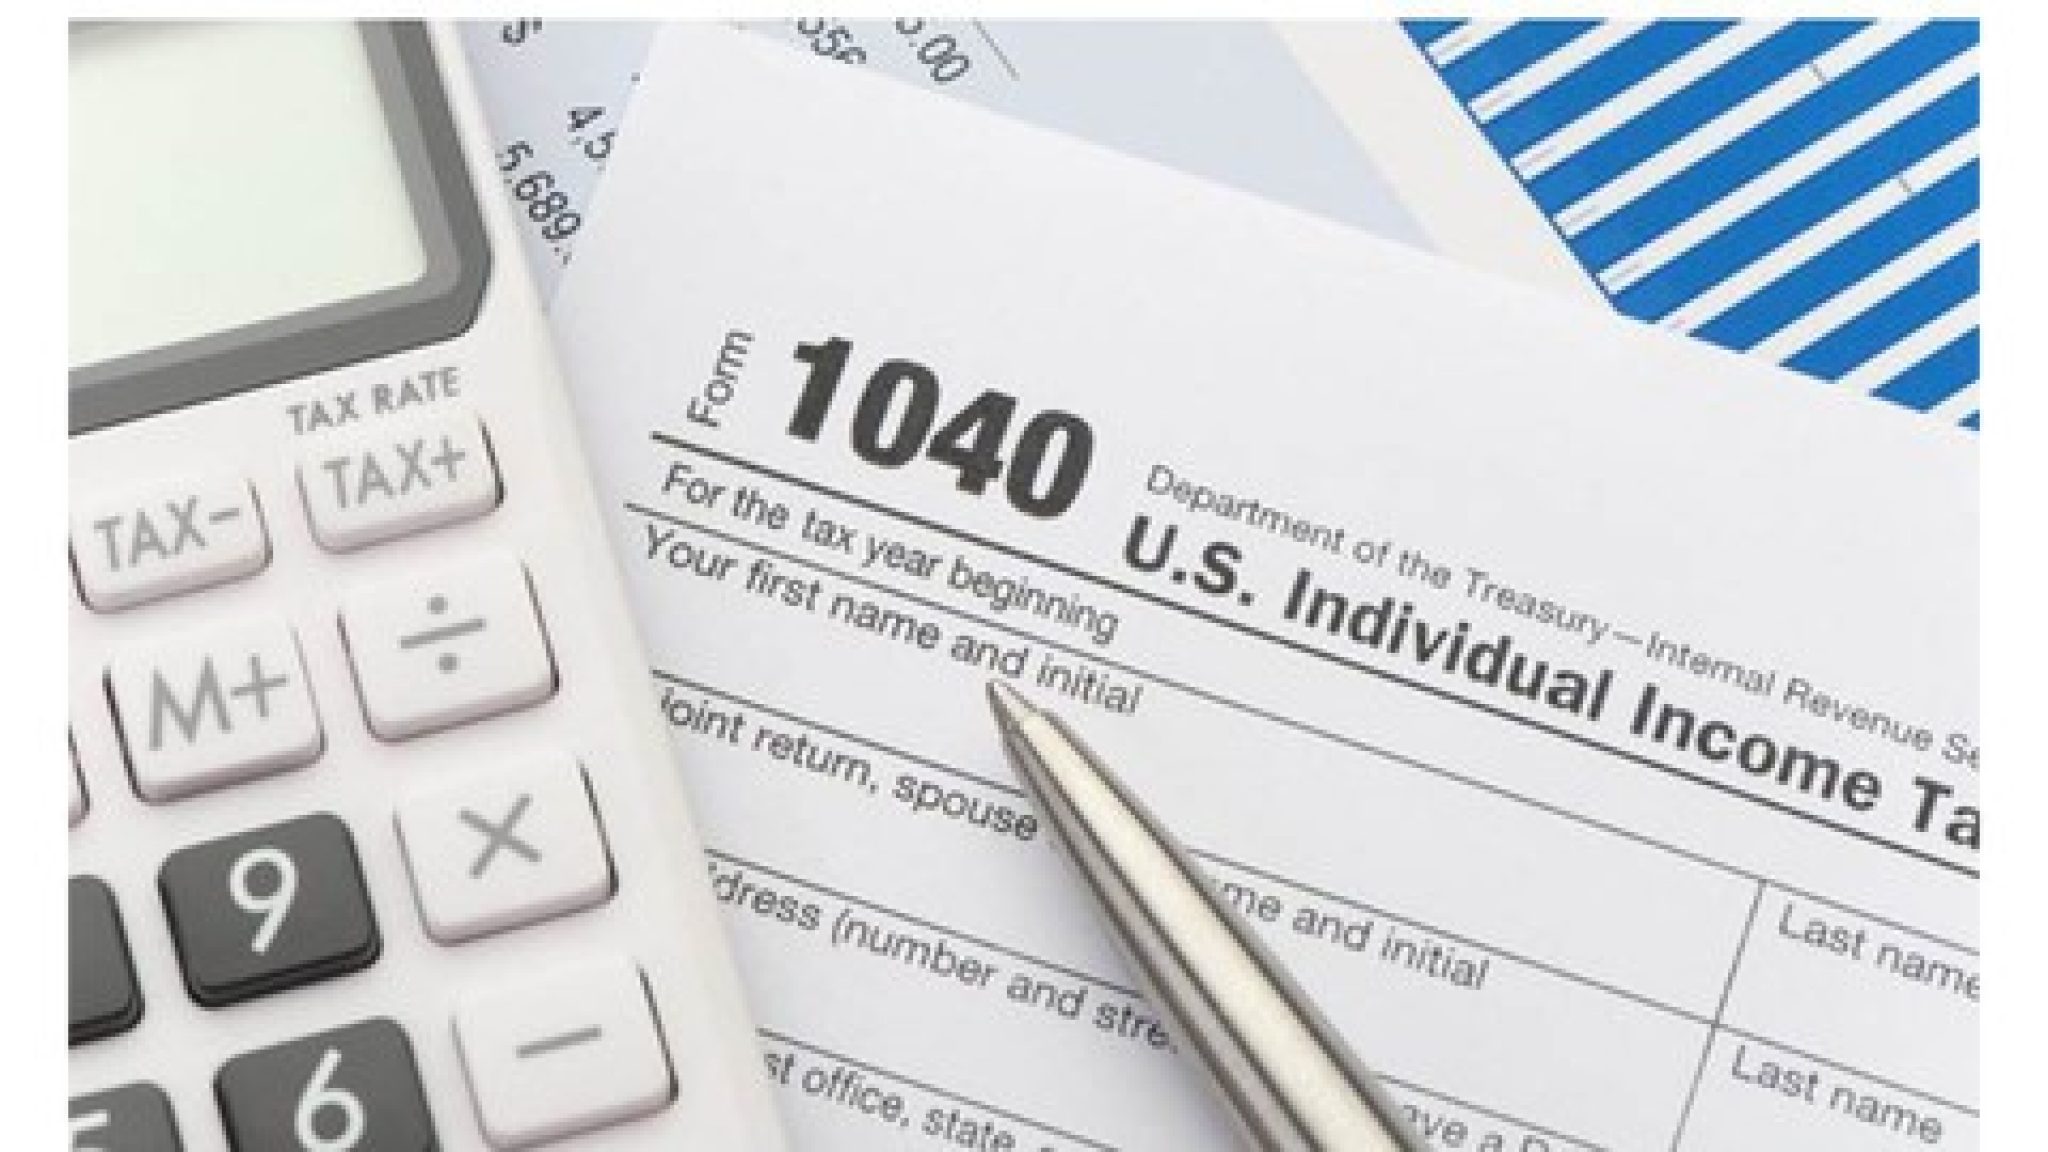 100-off-us-income-tax-preparation-irs-tutorial-bar